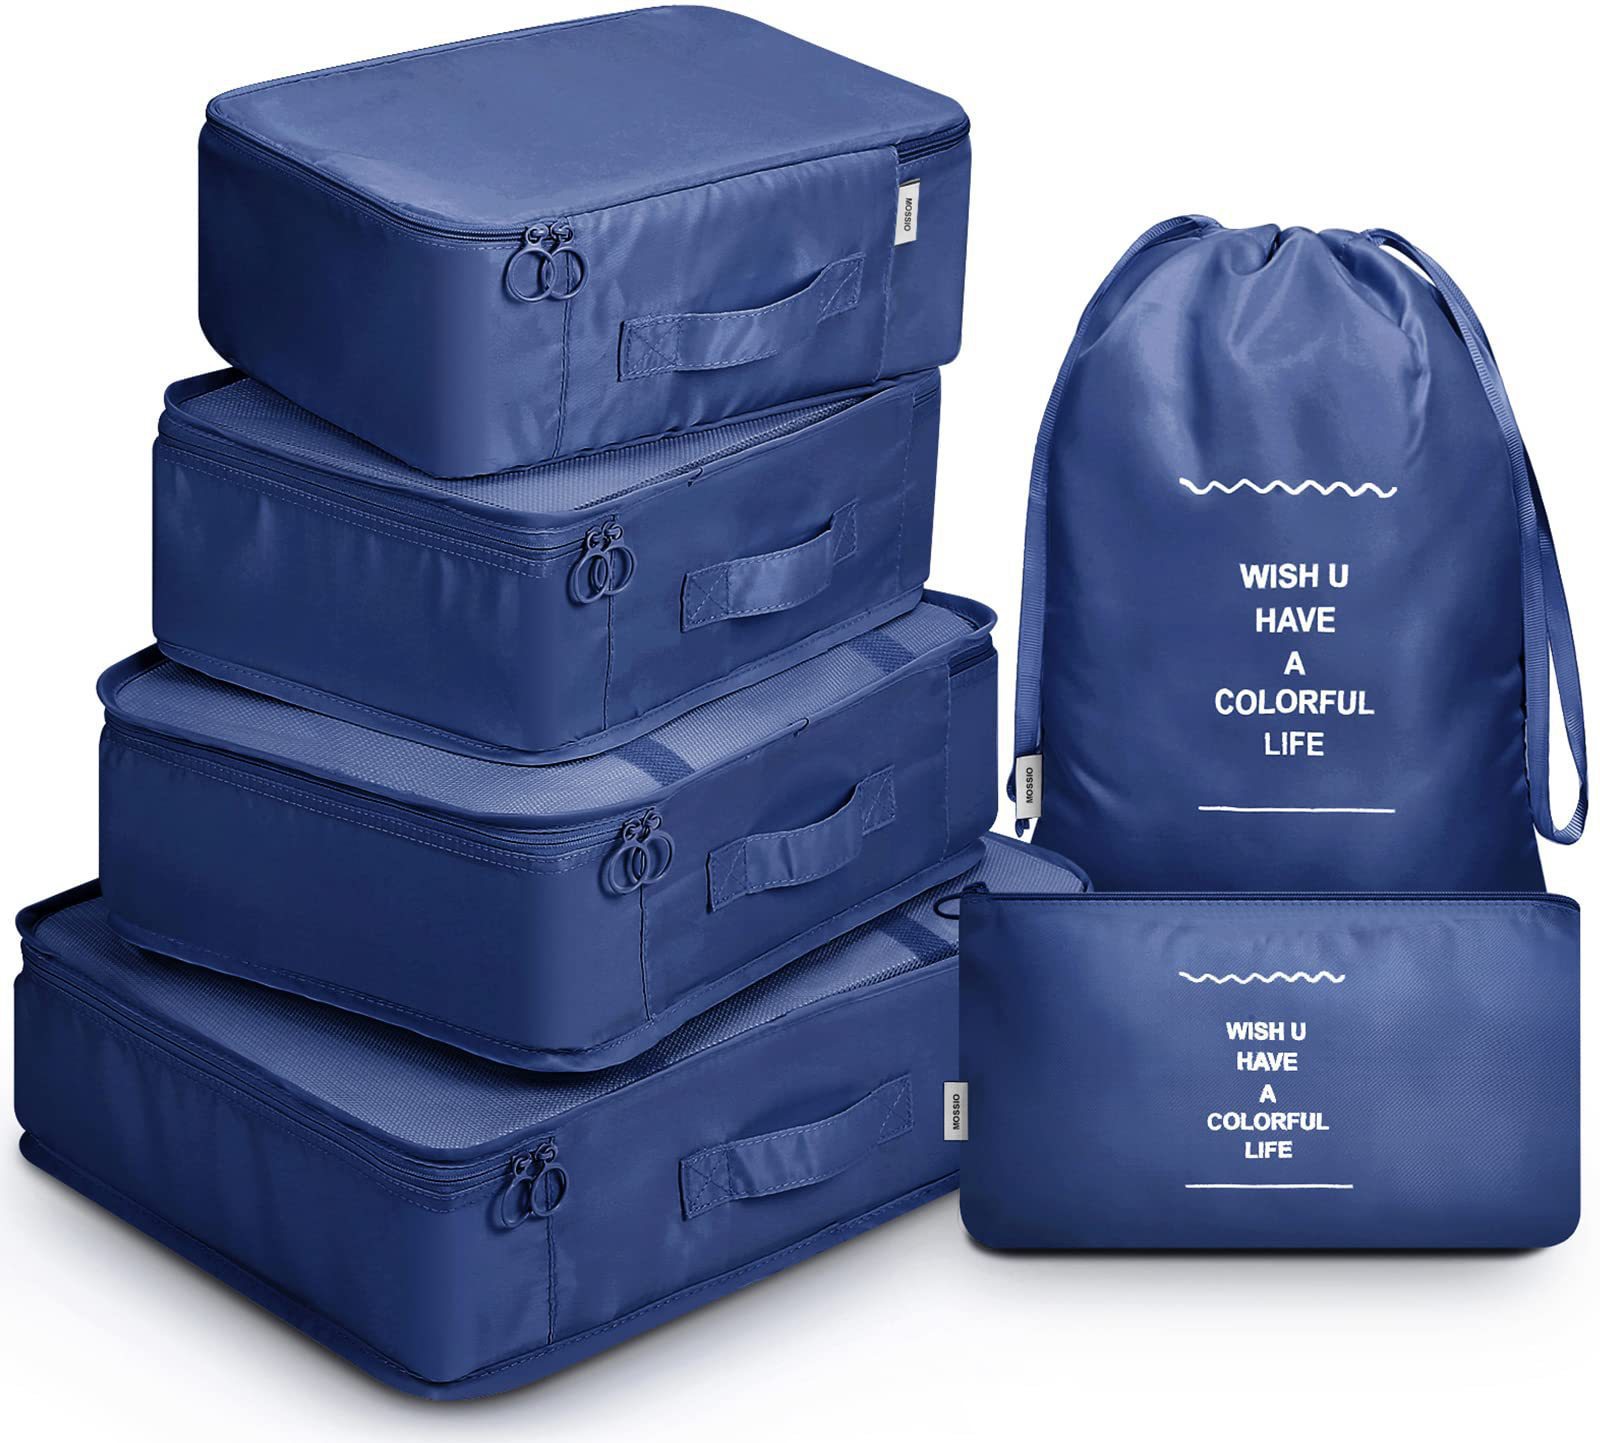 Travel Storage Box Storage Bag Set Twill Seven-Piece Travel Luggage Clothing Shoes Organizing Packing Bags